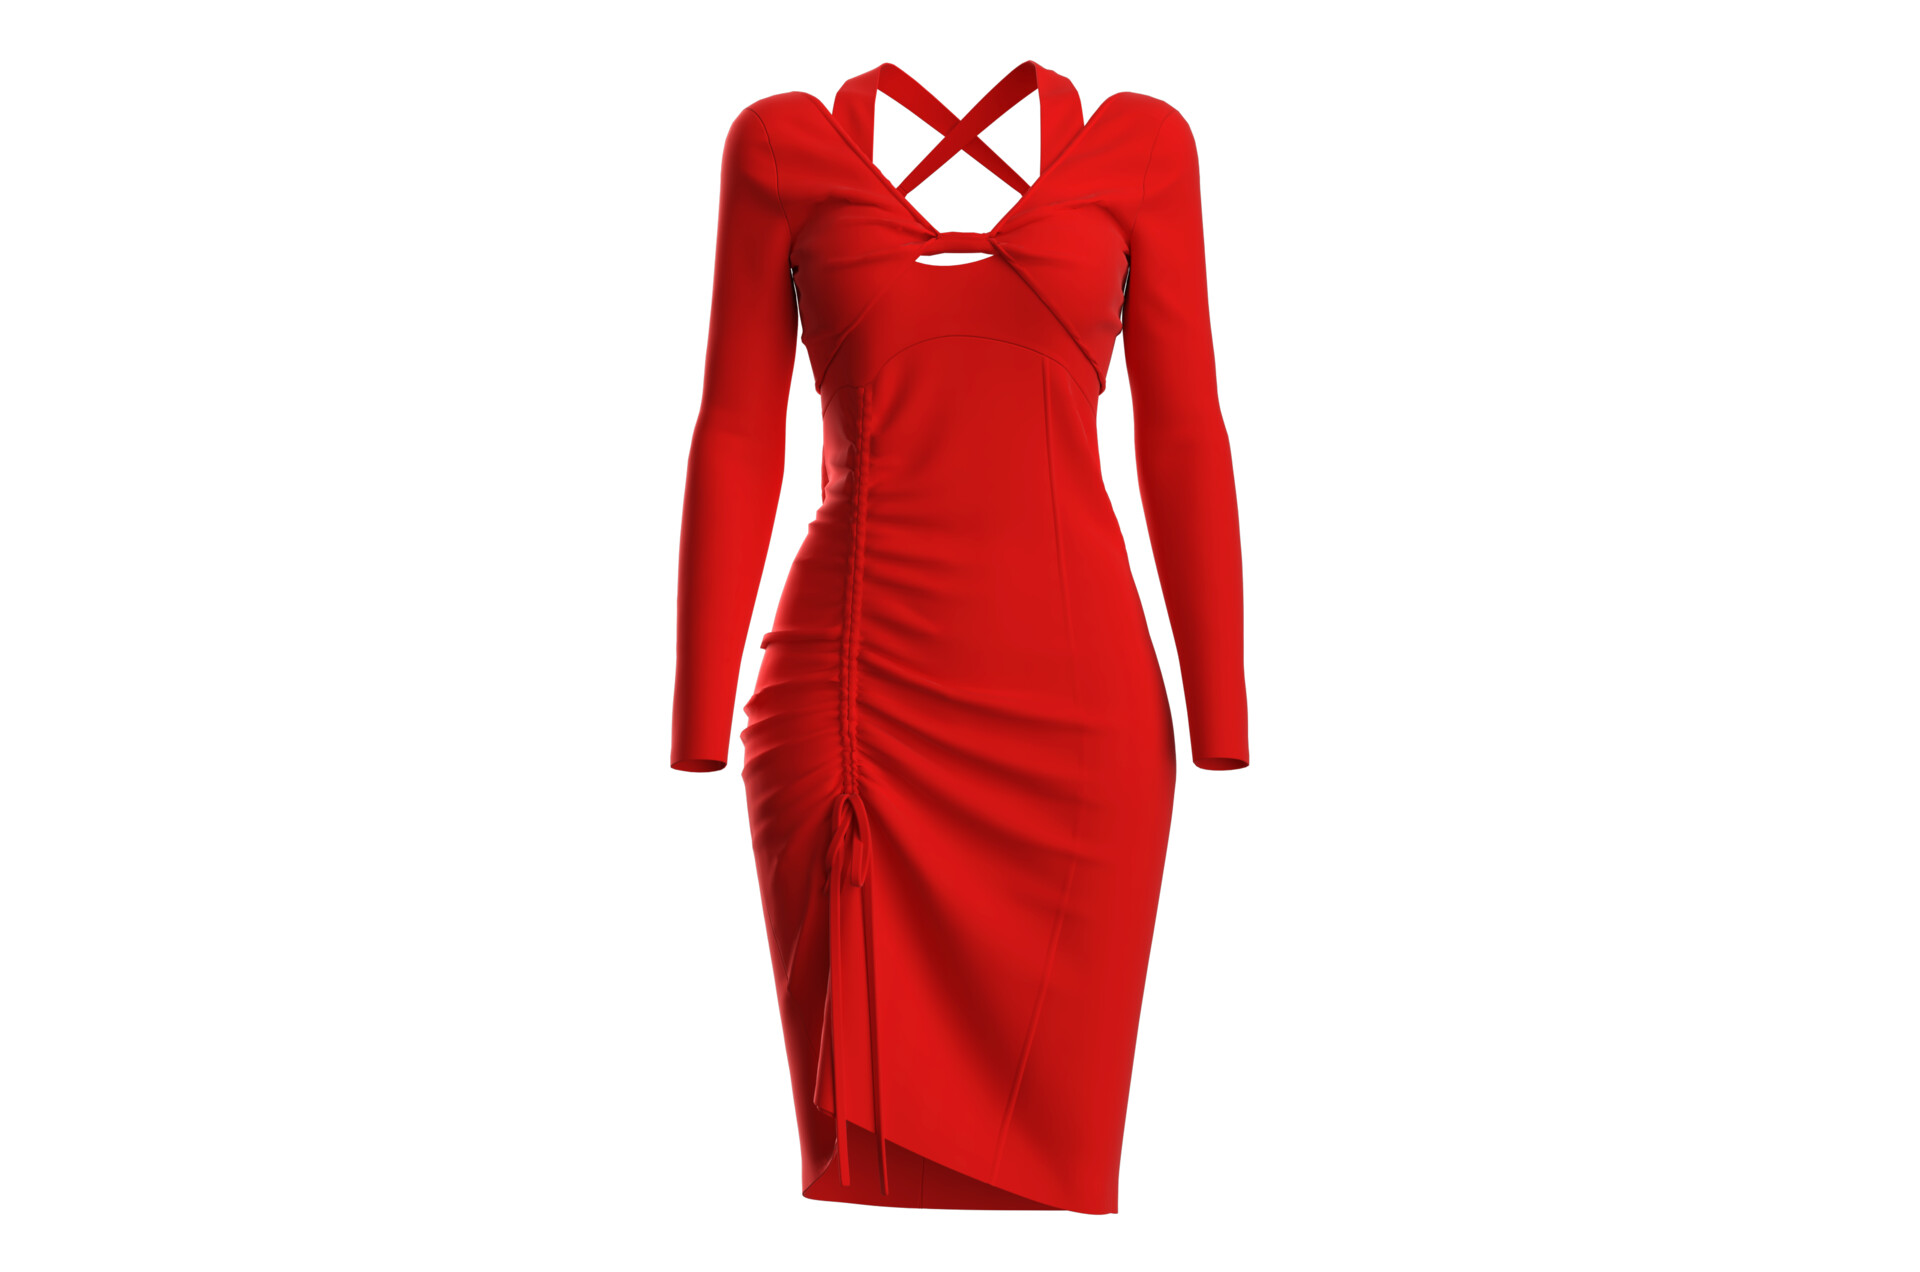 ArtStation - Red kink drawstring sheath dress红色扭结抽绳紧身连衣裙